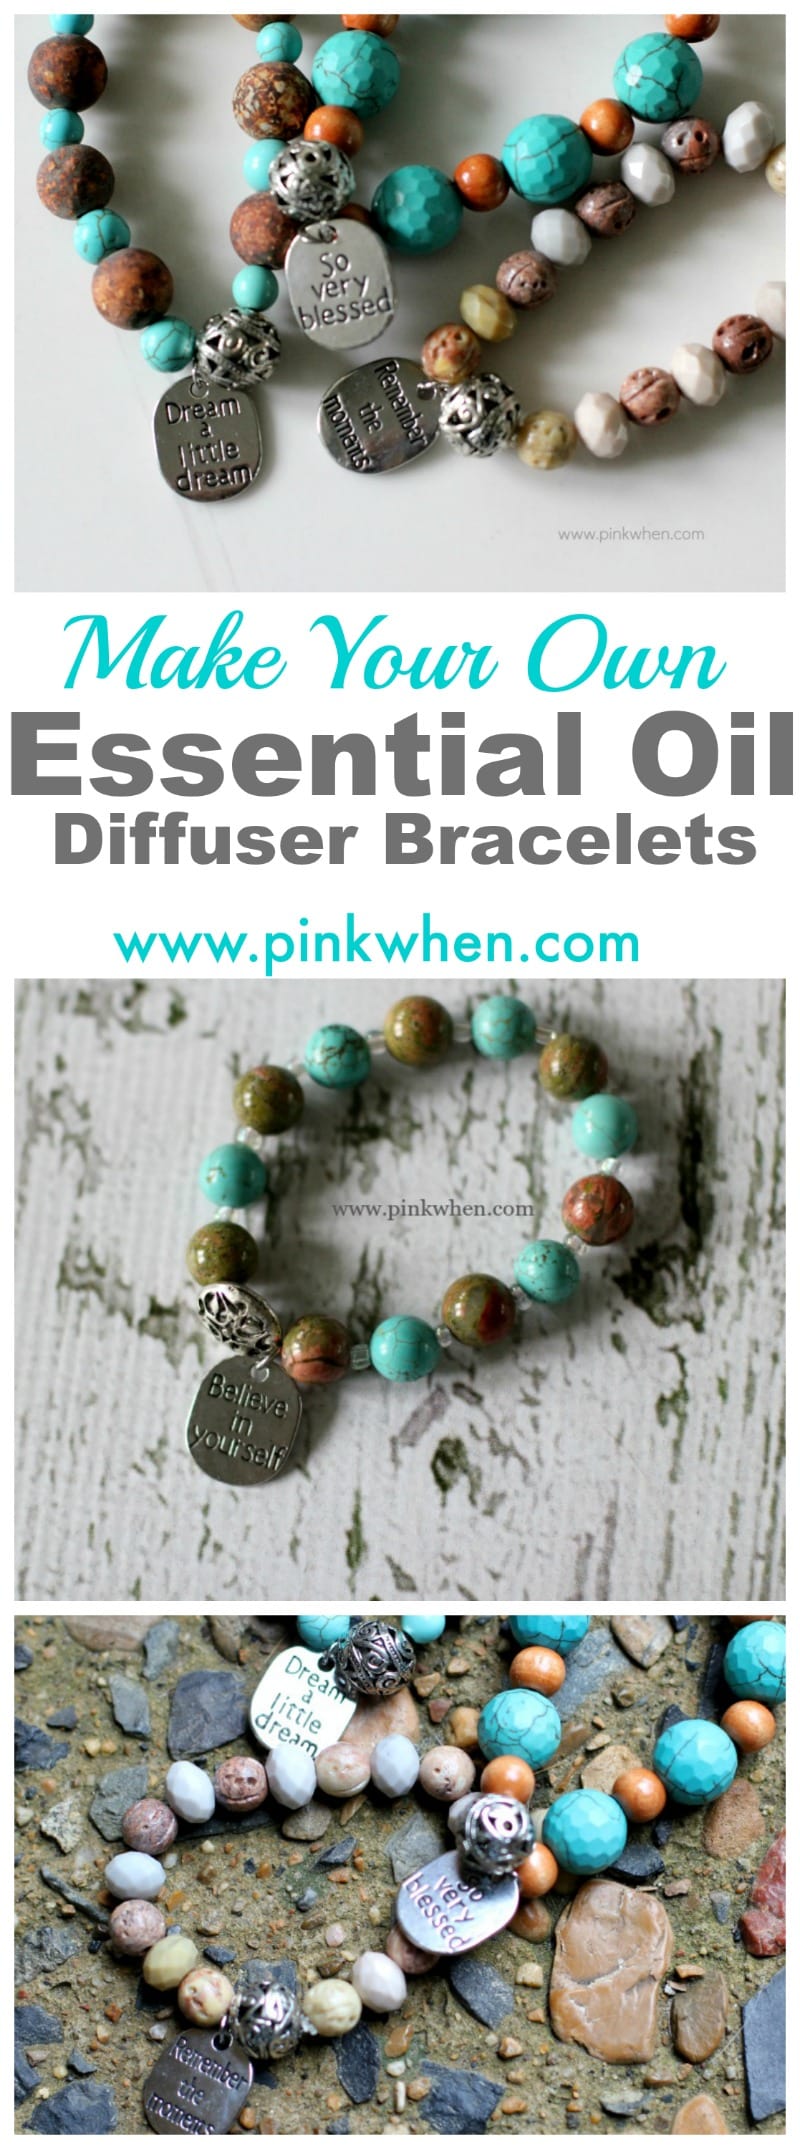 DIY Essential Oil Diffuser Bracelets